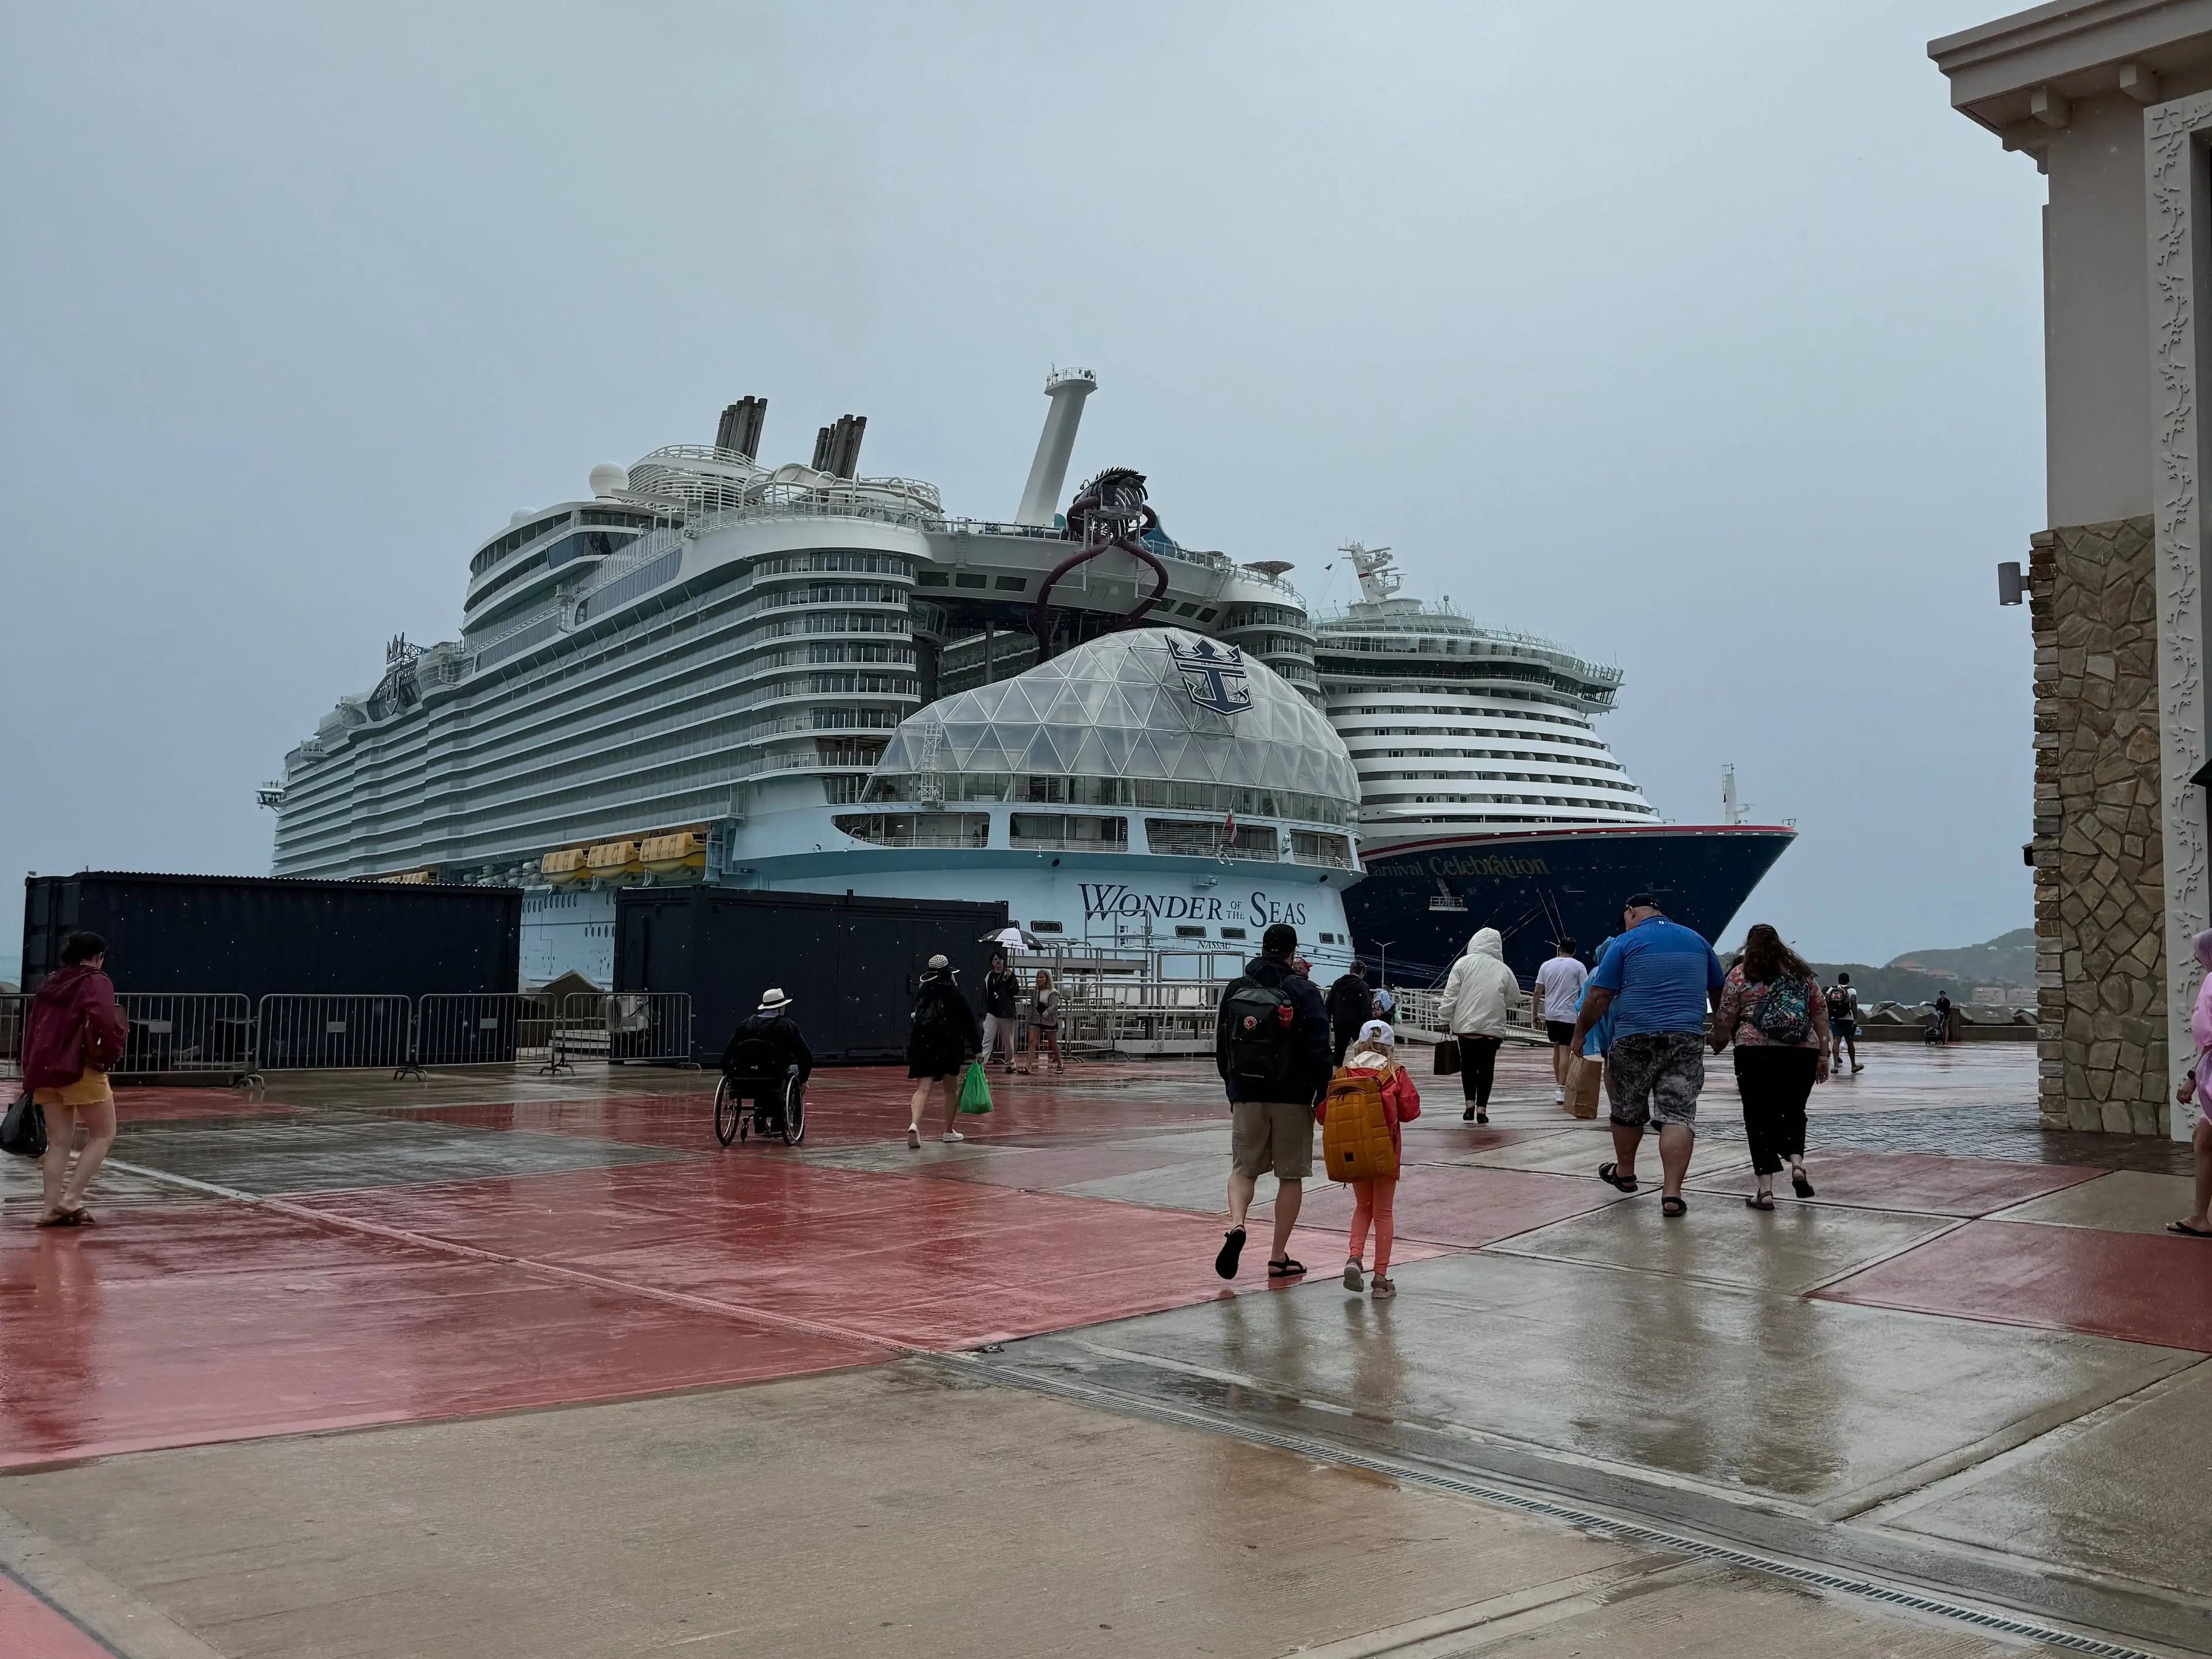 Wonder of the Seas at port on rainy day